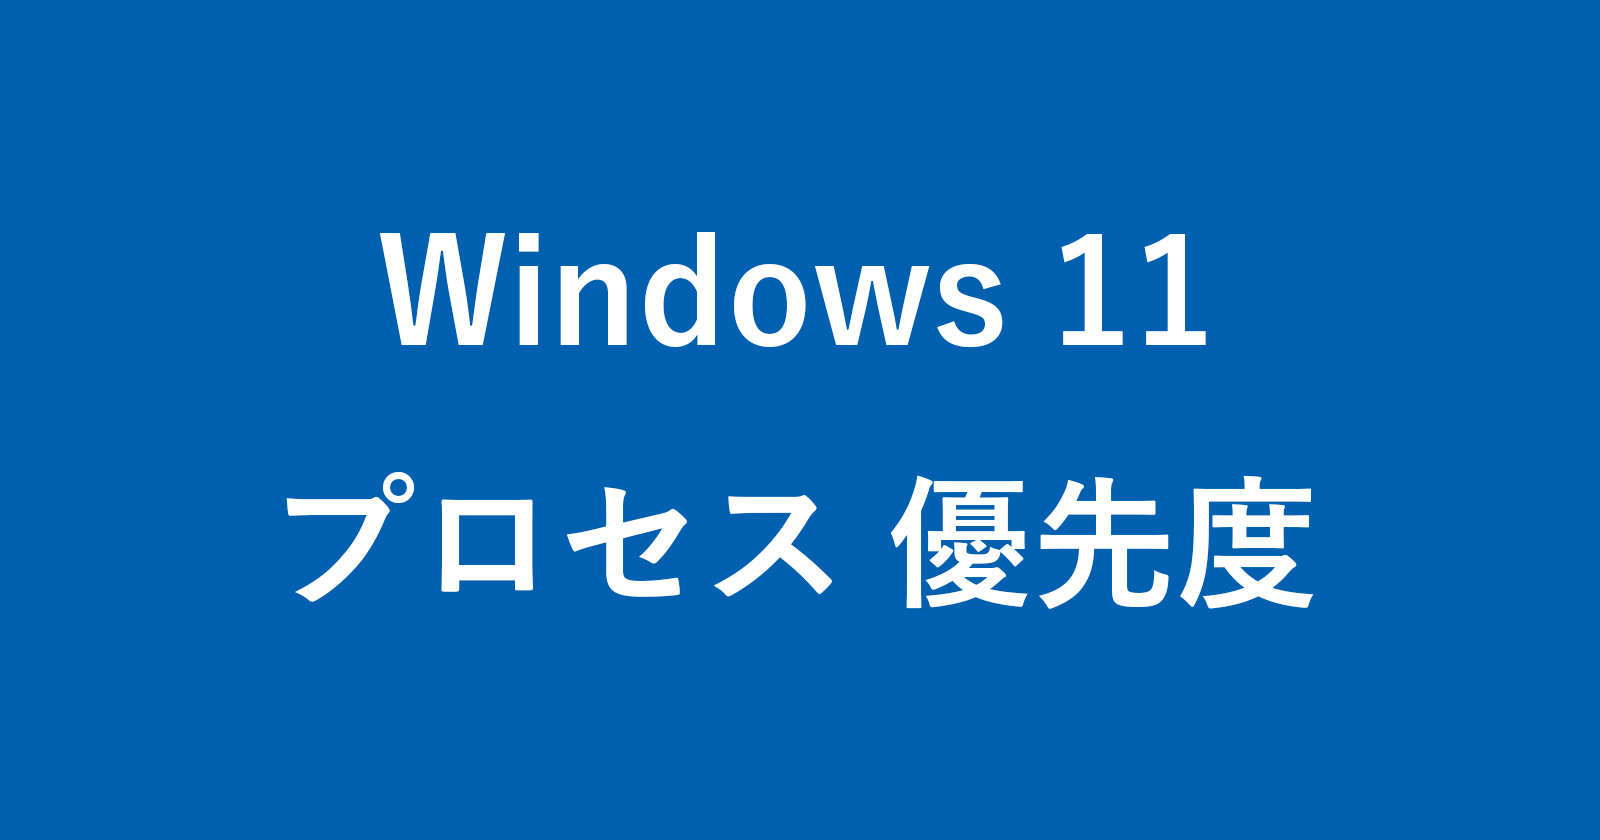 windows 11 process priority